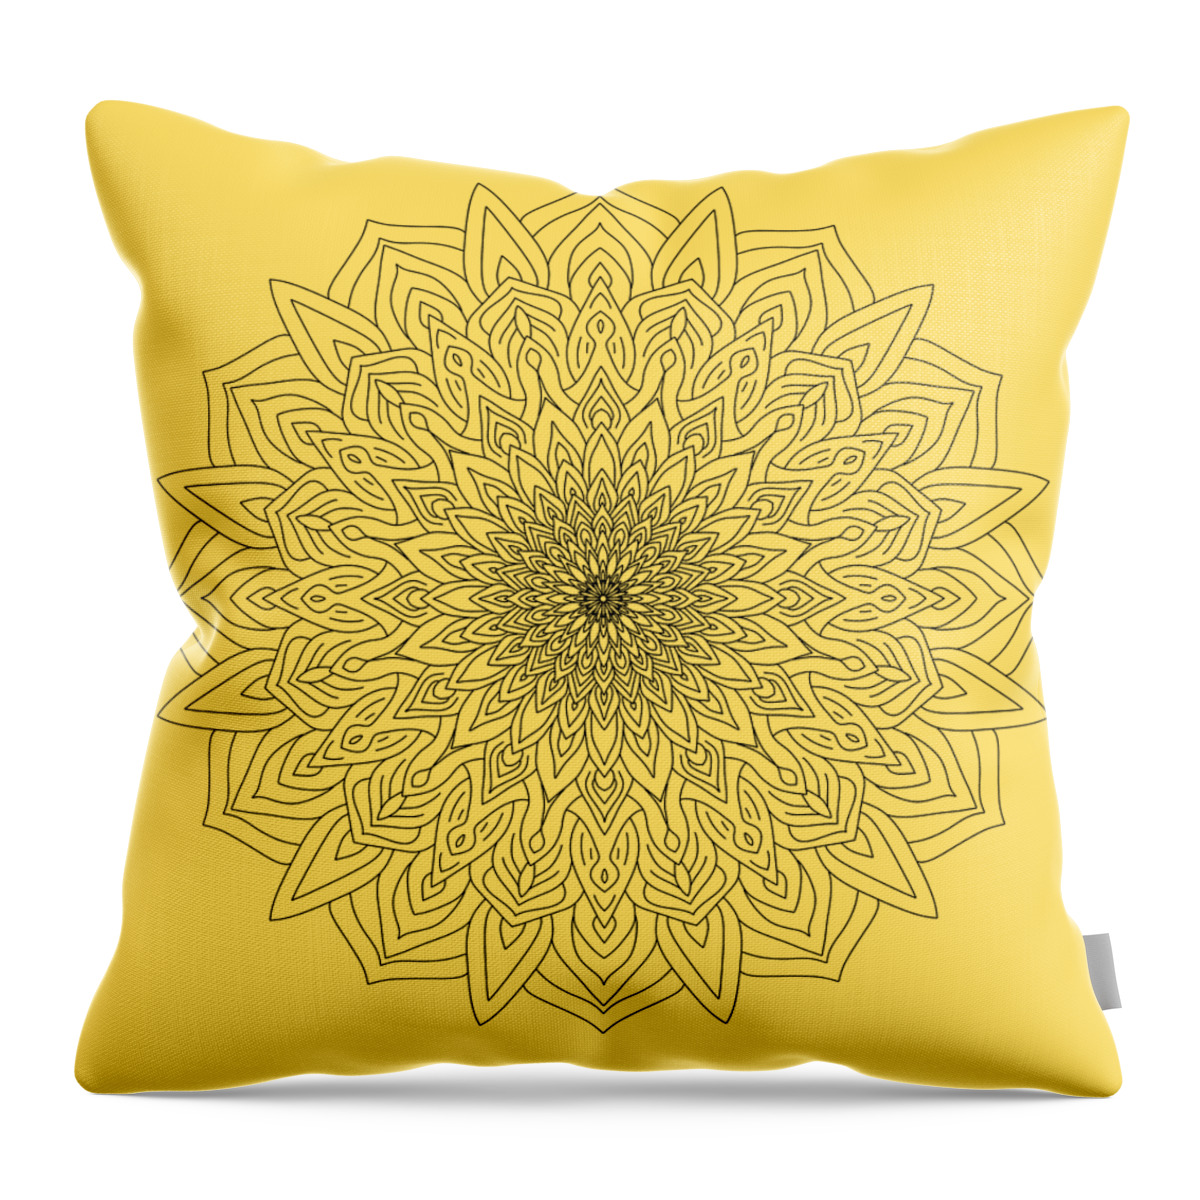 Flowers Throw Pillow featuring the digital art Mandala 58 by Angie Tirado